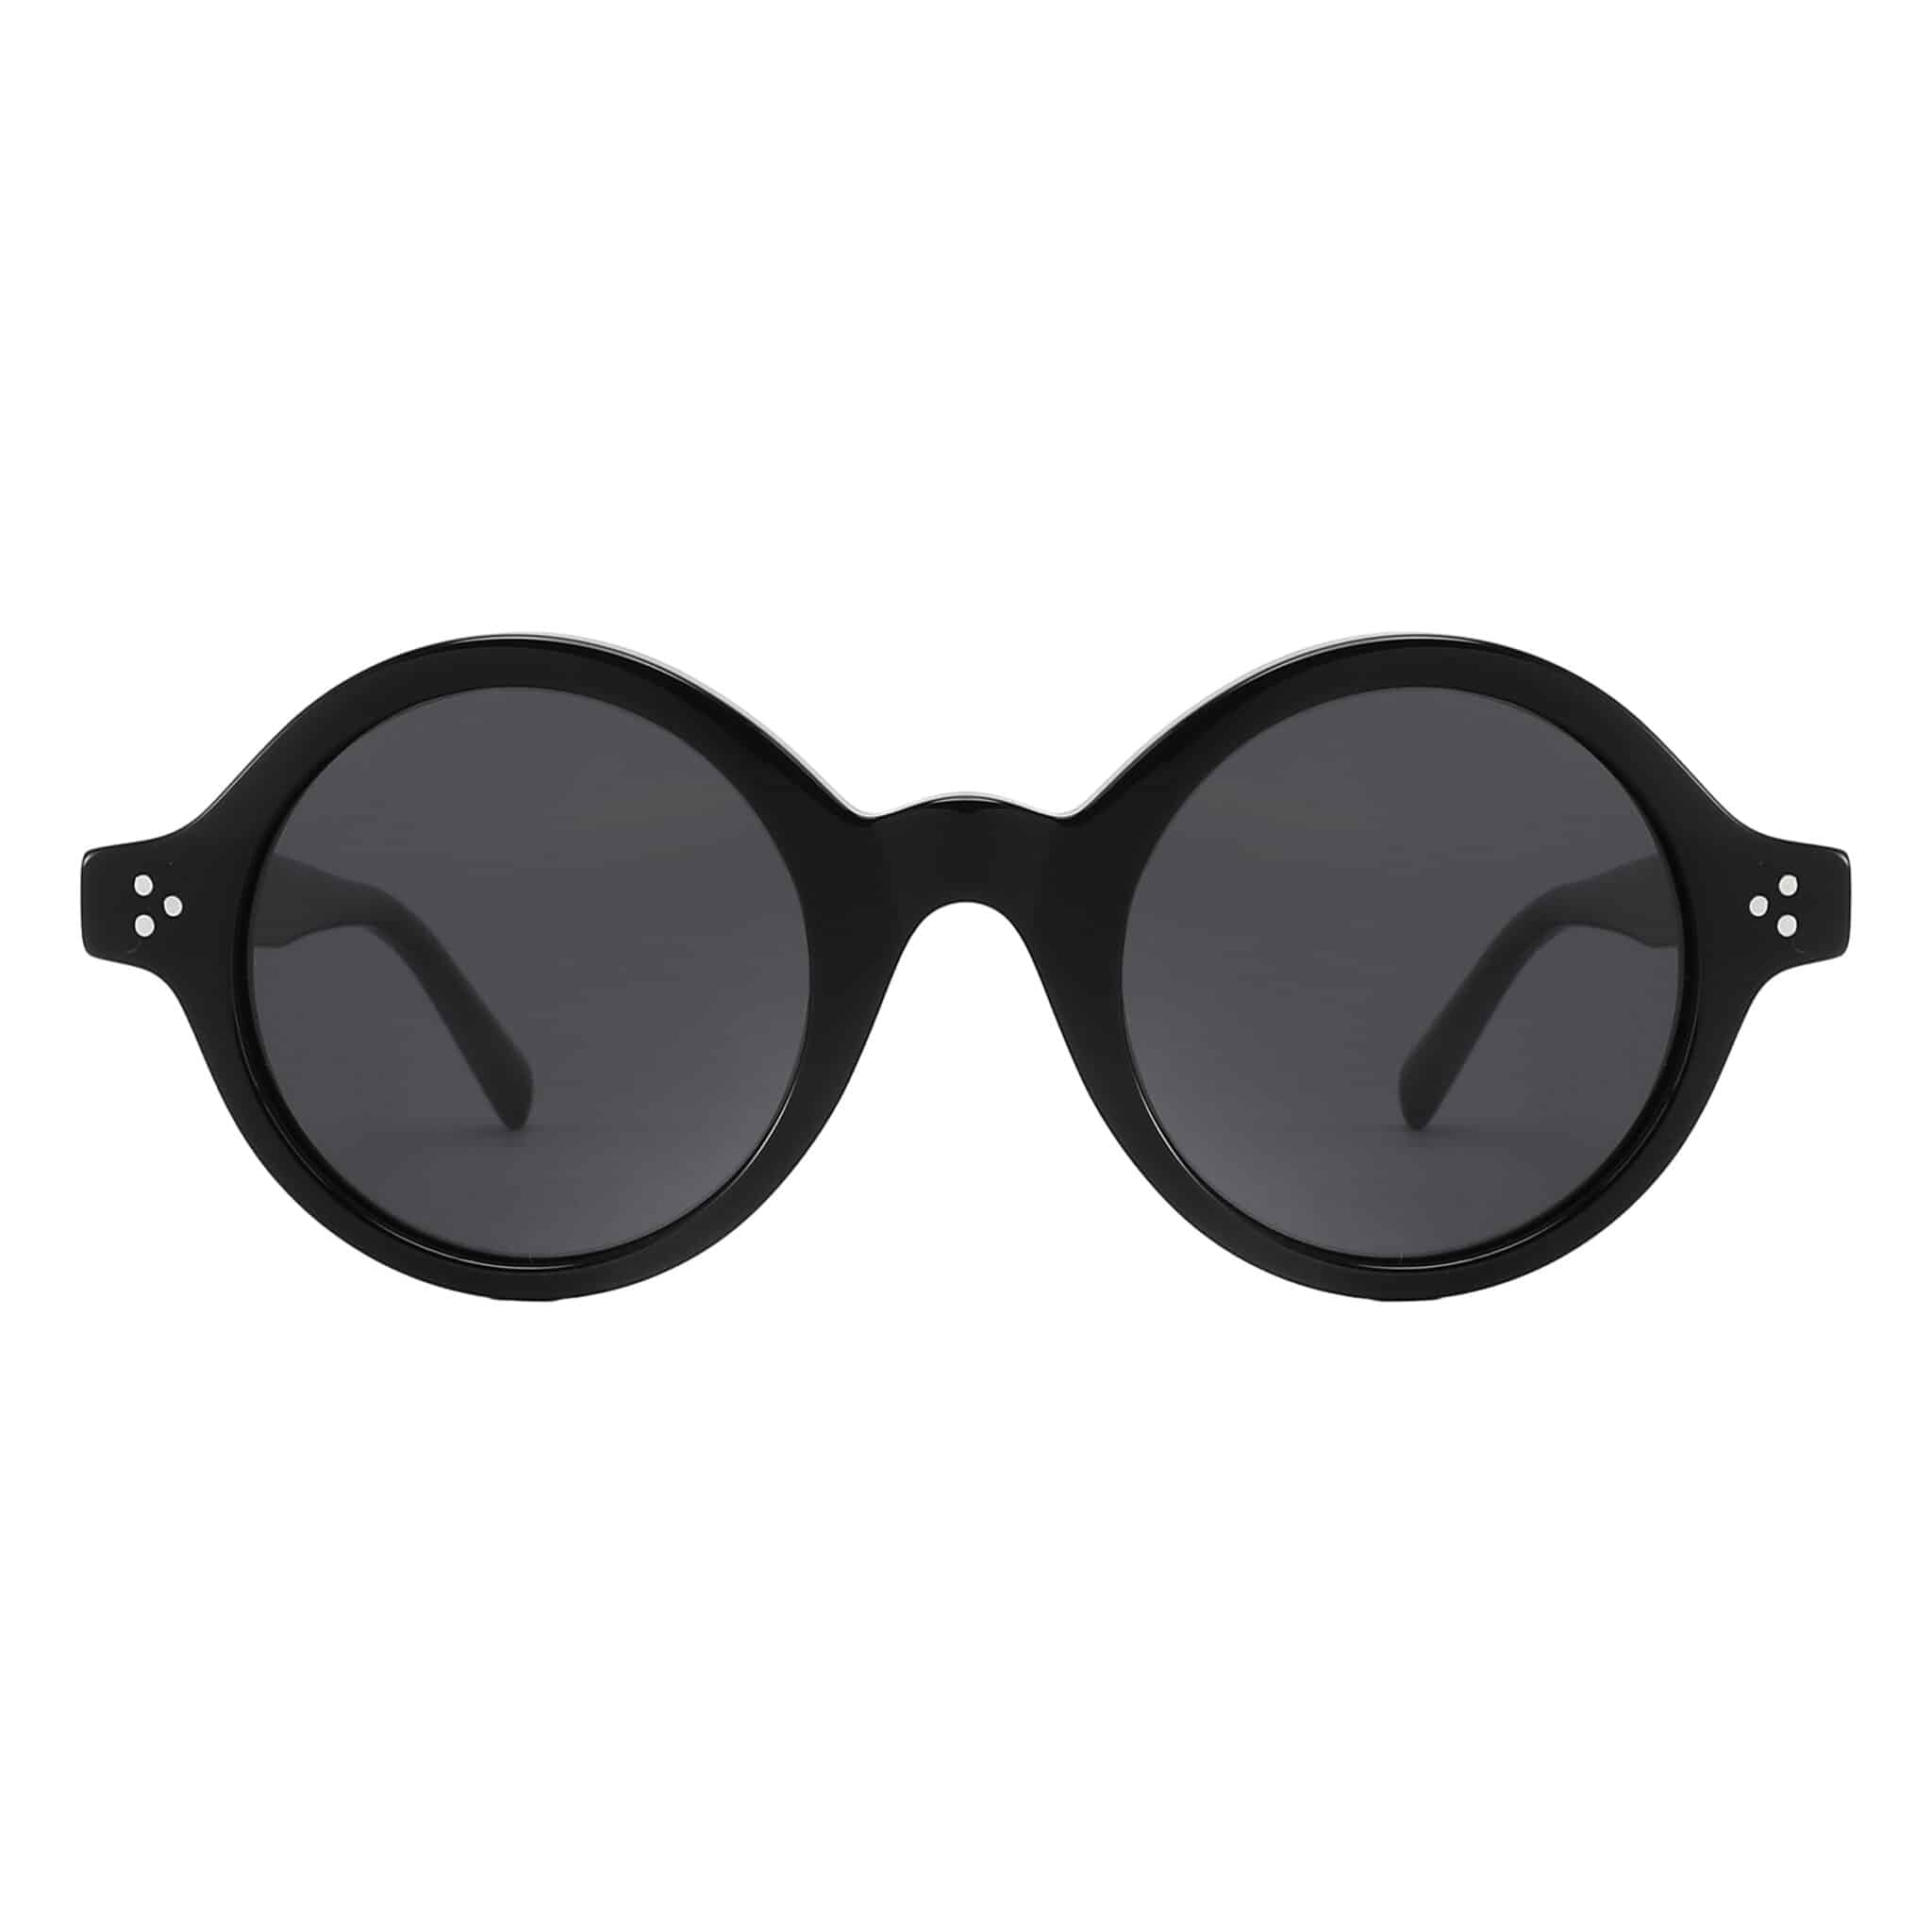 Round Prescription Sunglasses Online